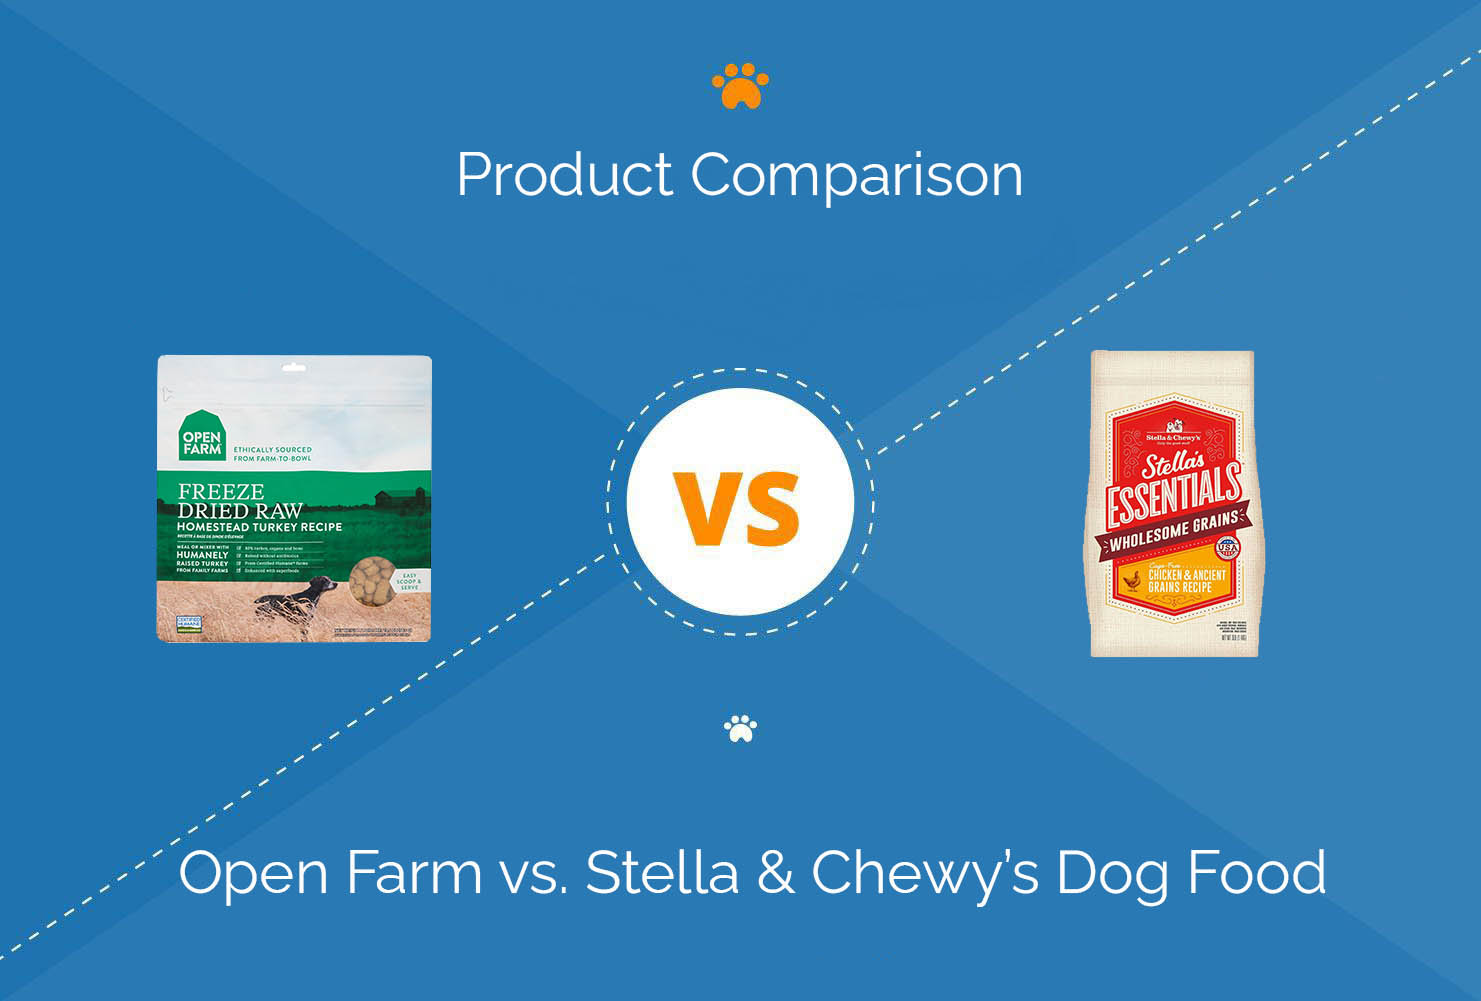 Open Farm vs. Stella & Chewy’s Dog Food